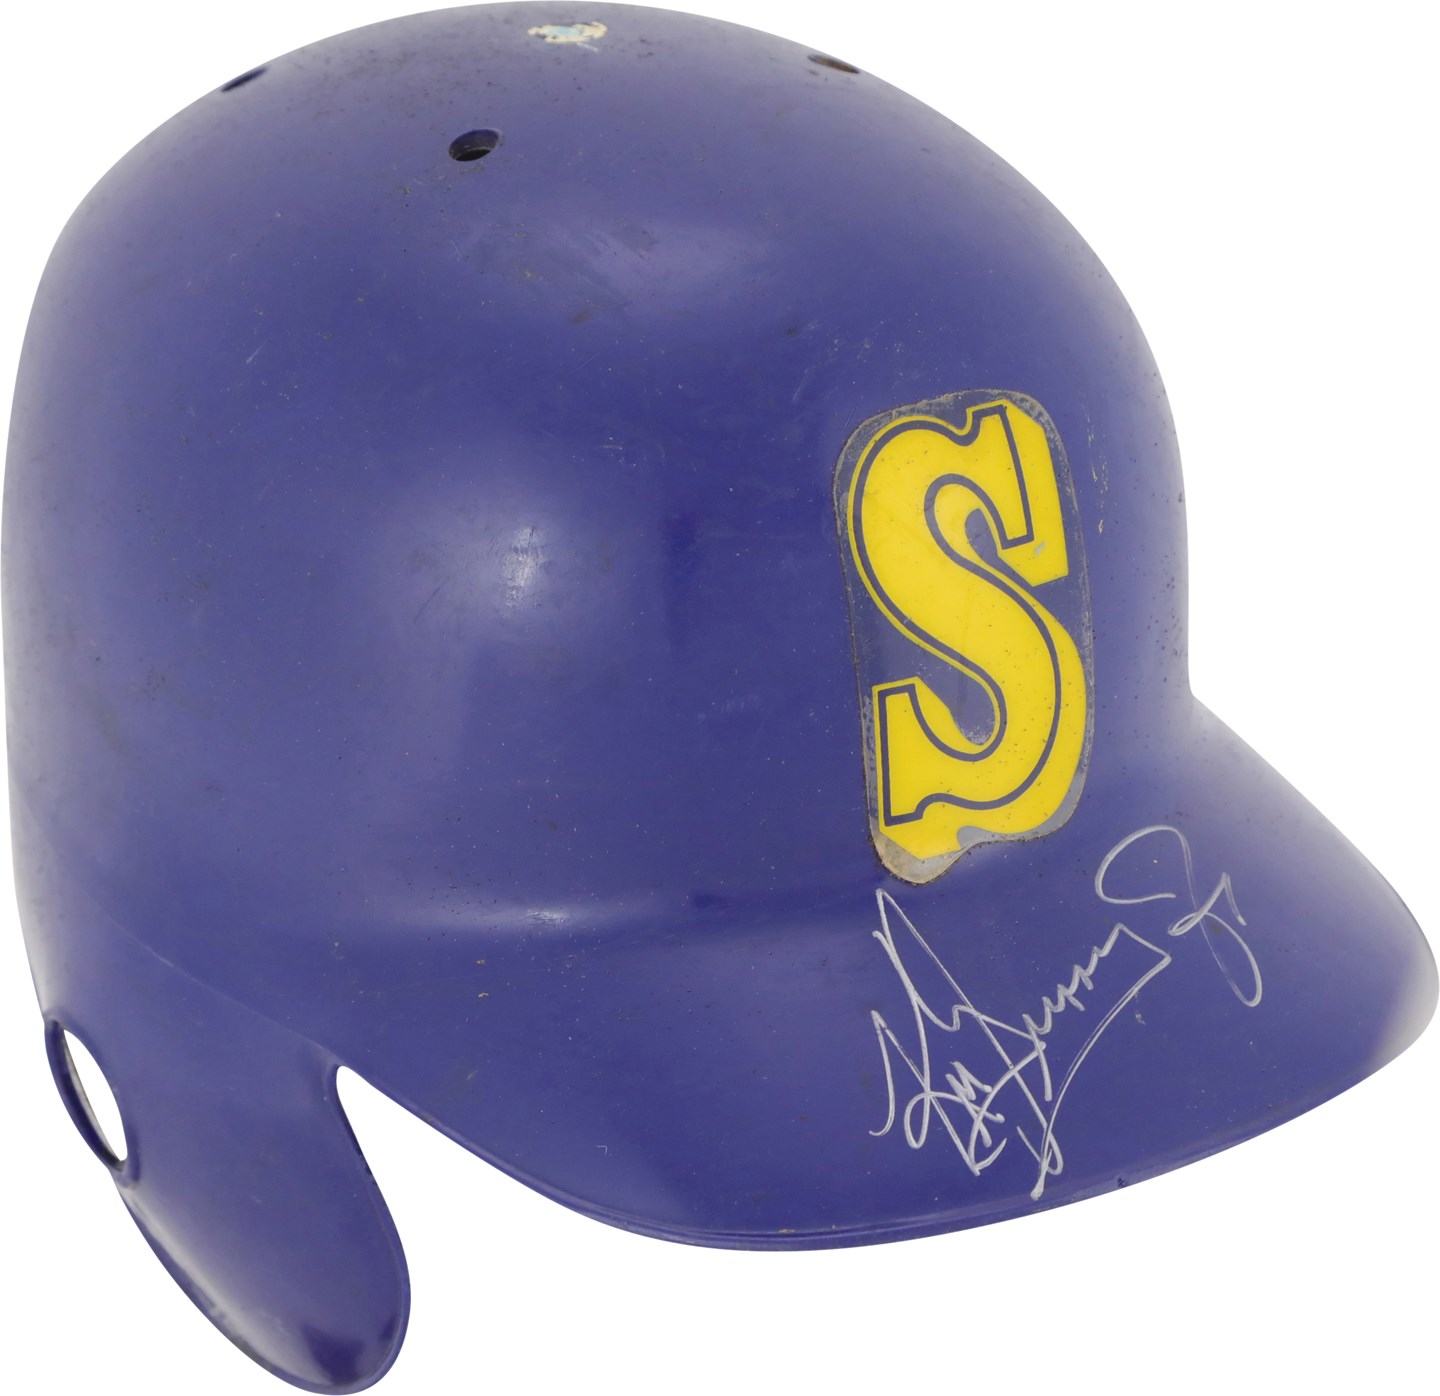 Baseball Equipment - 1990 Ken Griffey Jr. Rookie-Era Seattle Mariners Signed Game Used Helmet (JSA)